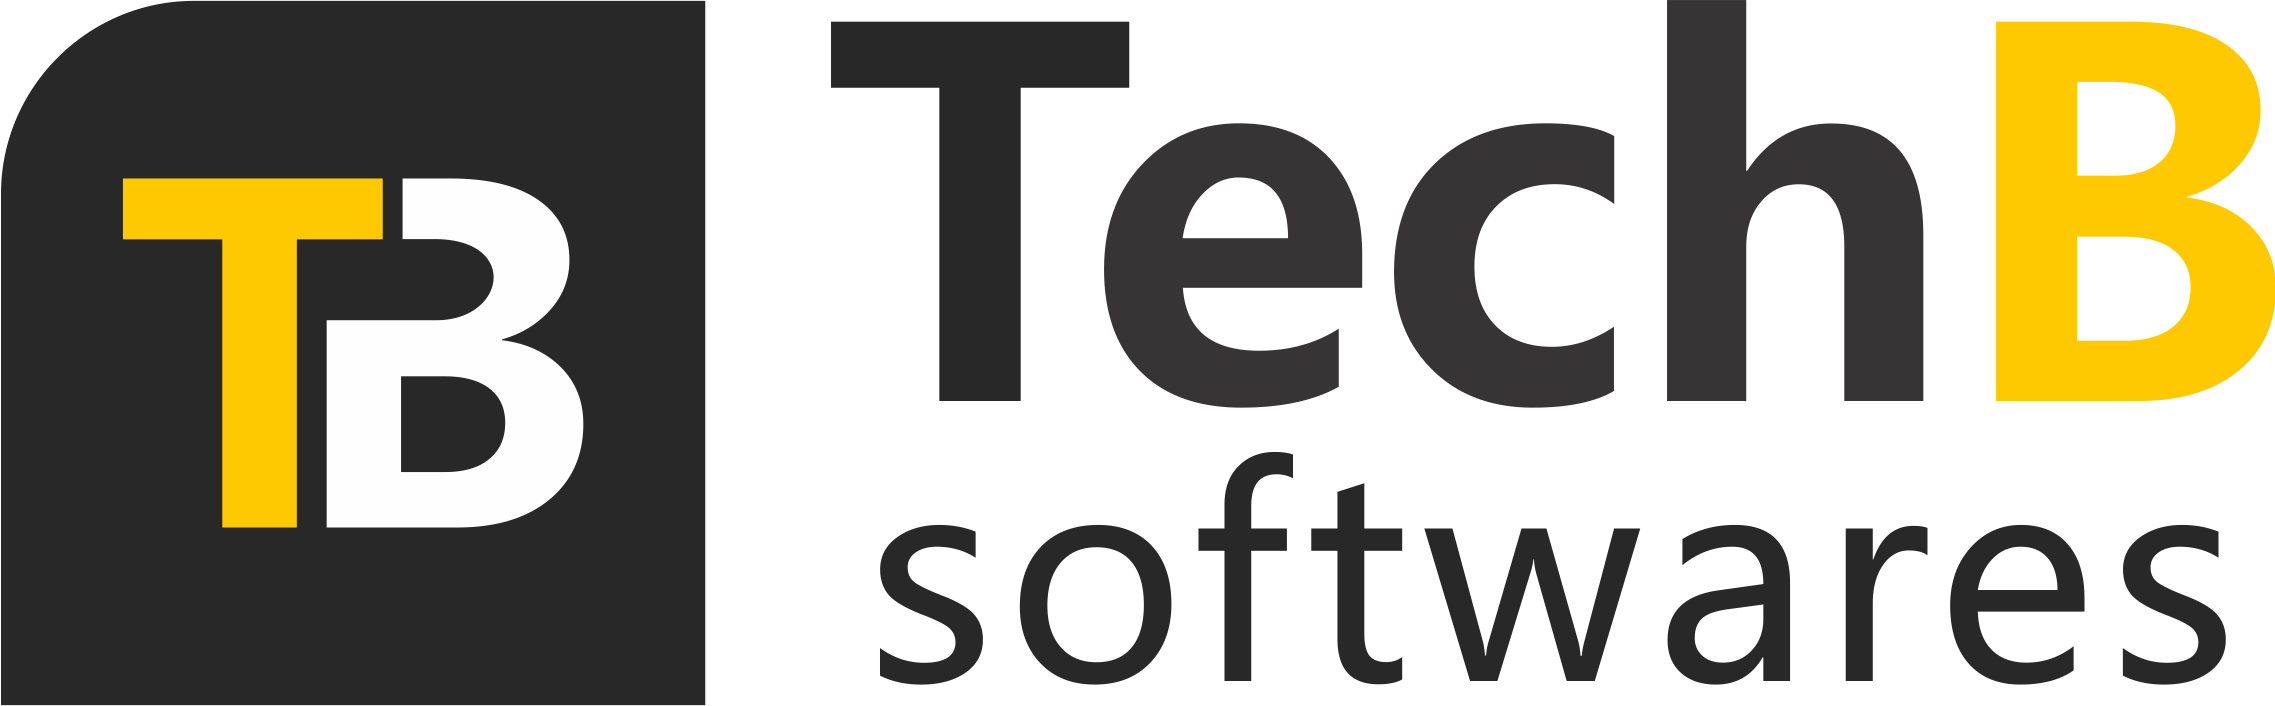 TechB Softwares